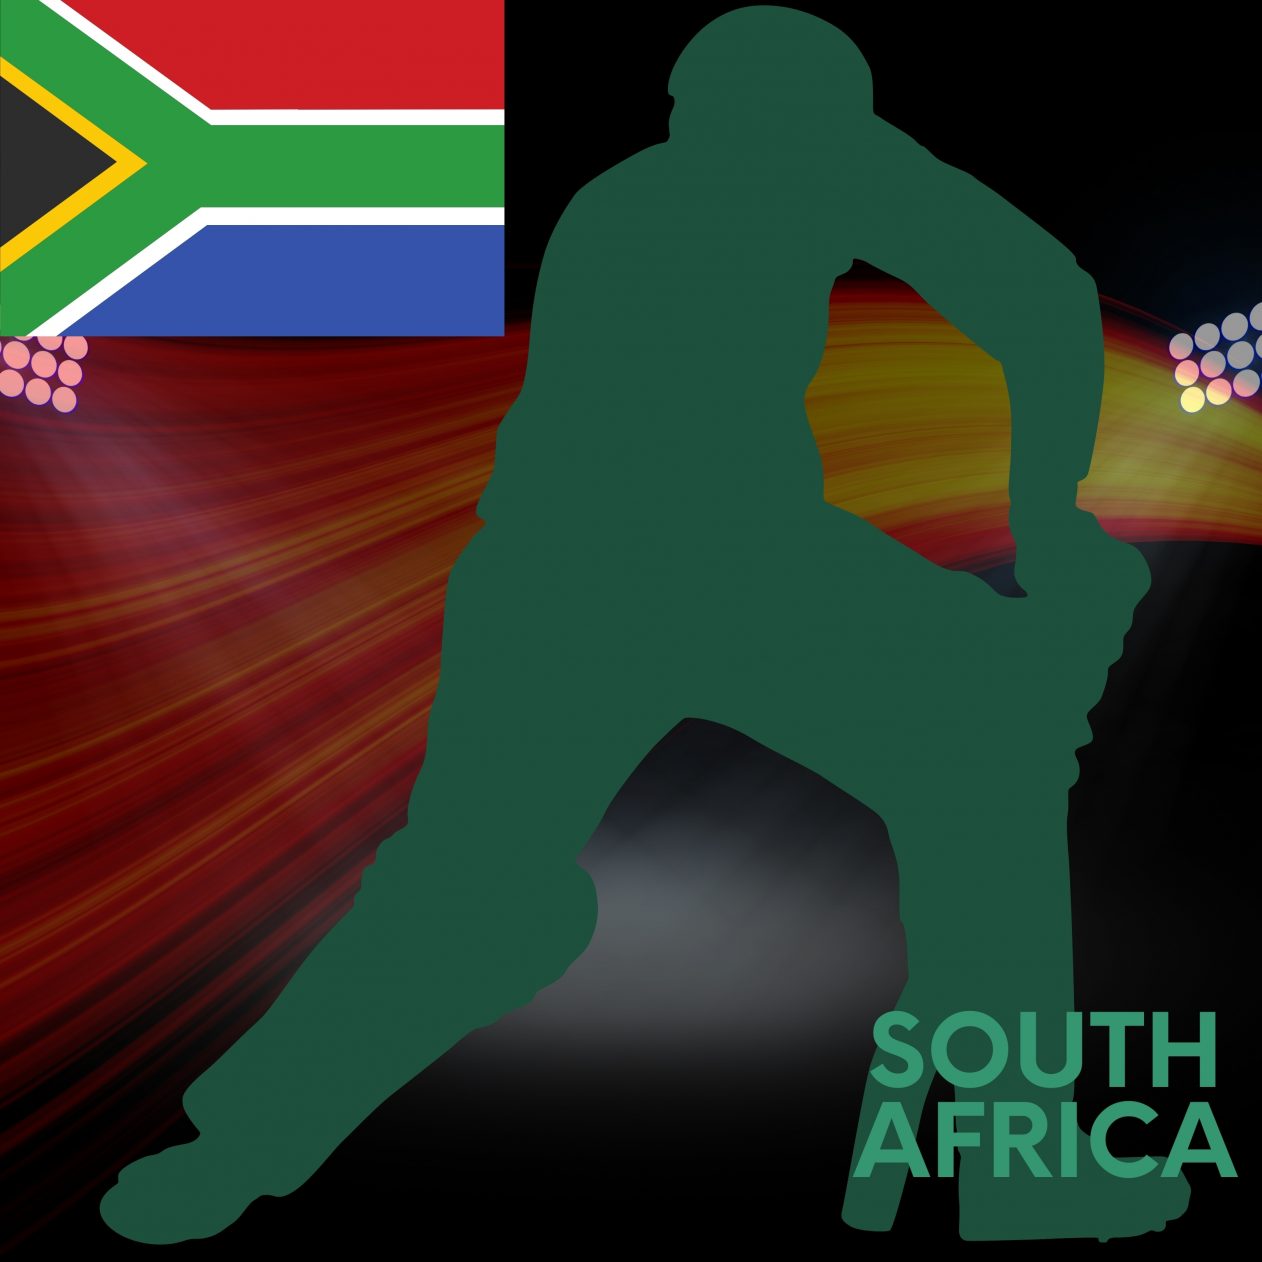 1262x1262 Parallax wallpaper 4k South Africa Cricket Stadium iPad Wallpaper 1262x1262 pixels resolution